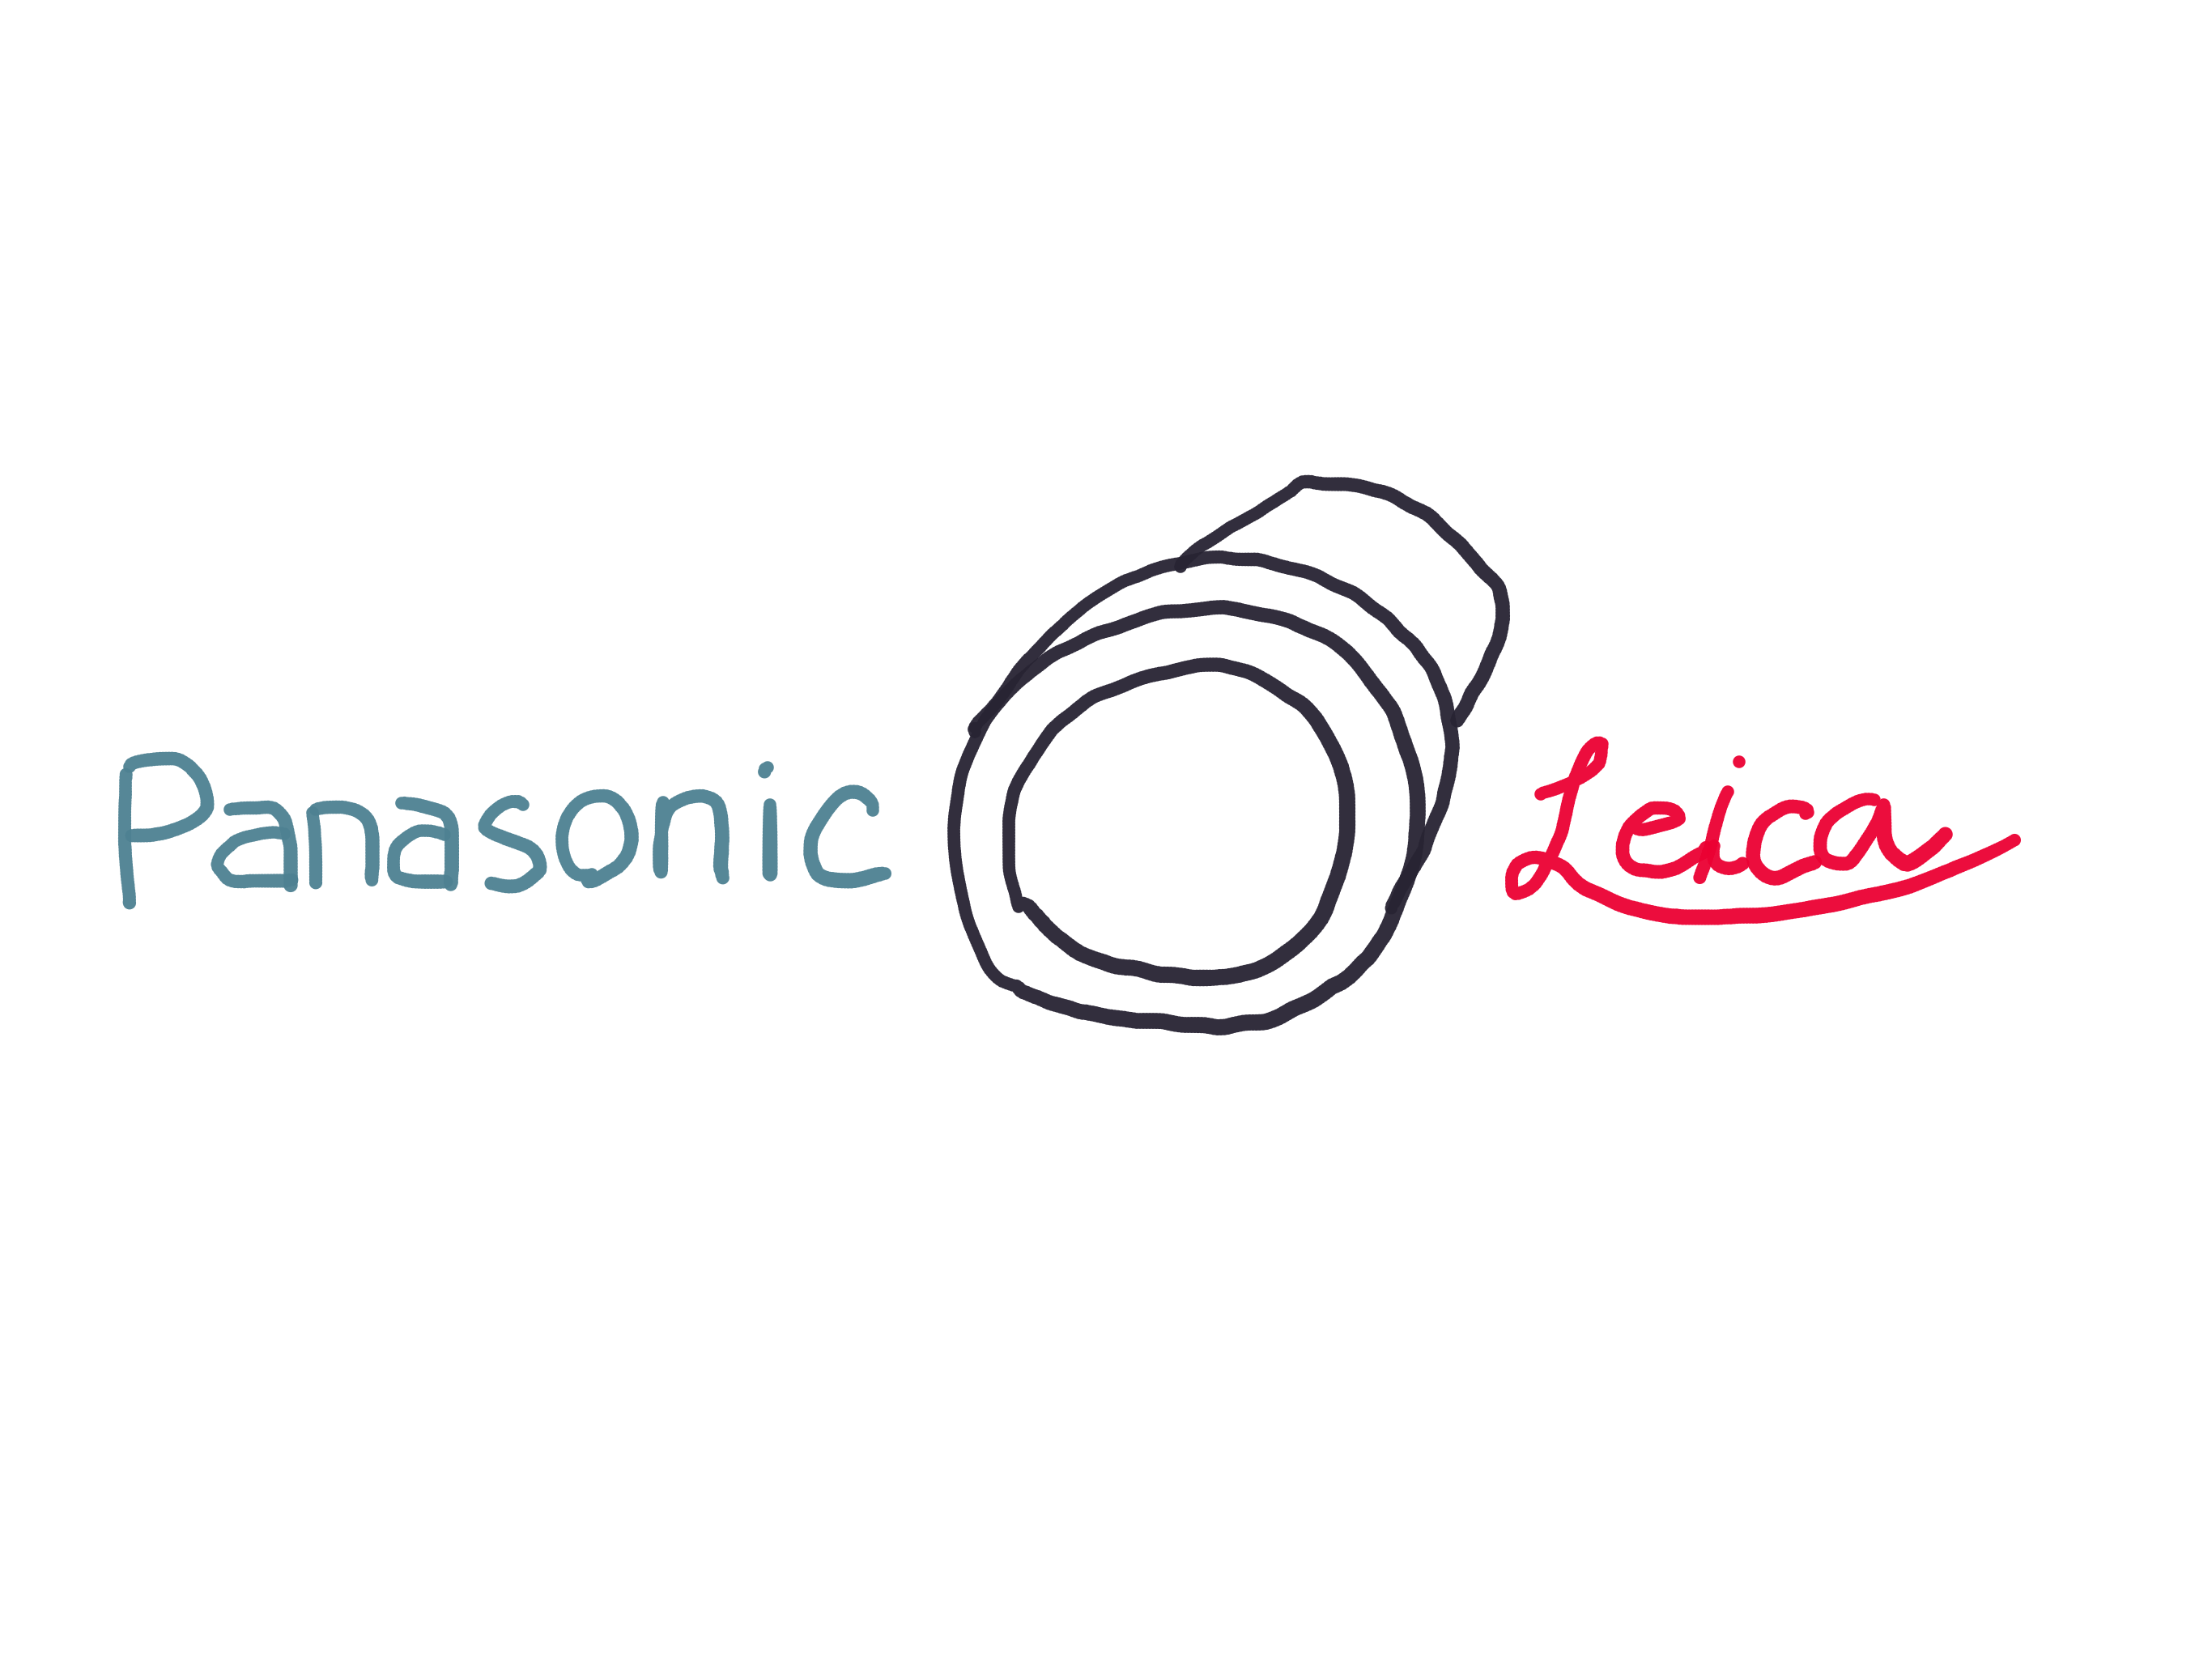 Panasonic Leicaレンズの作例